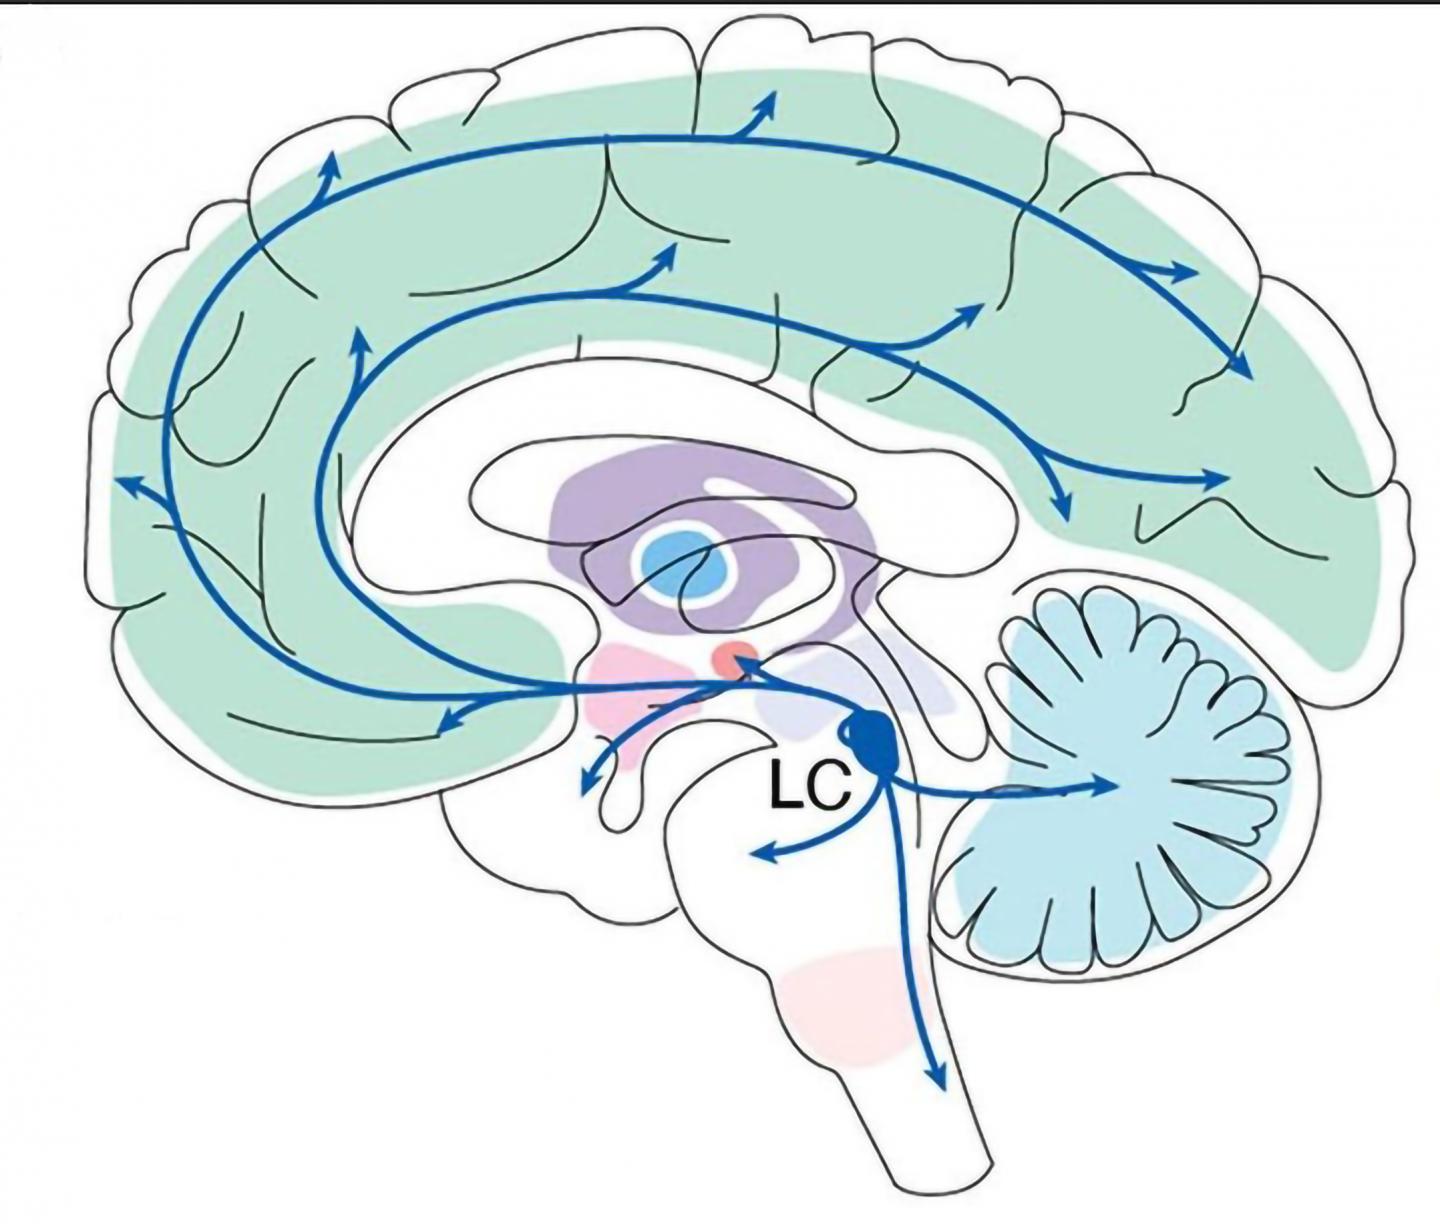 Neuroscientists posit that brain region is a key locus of learning